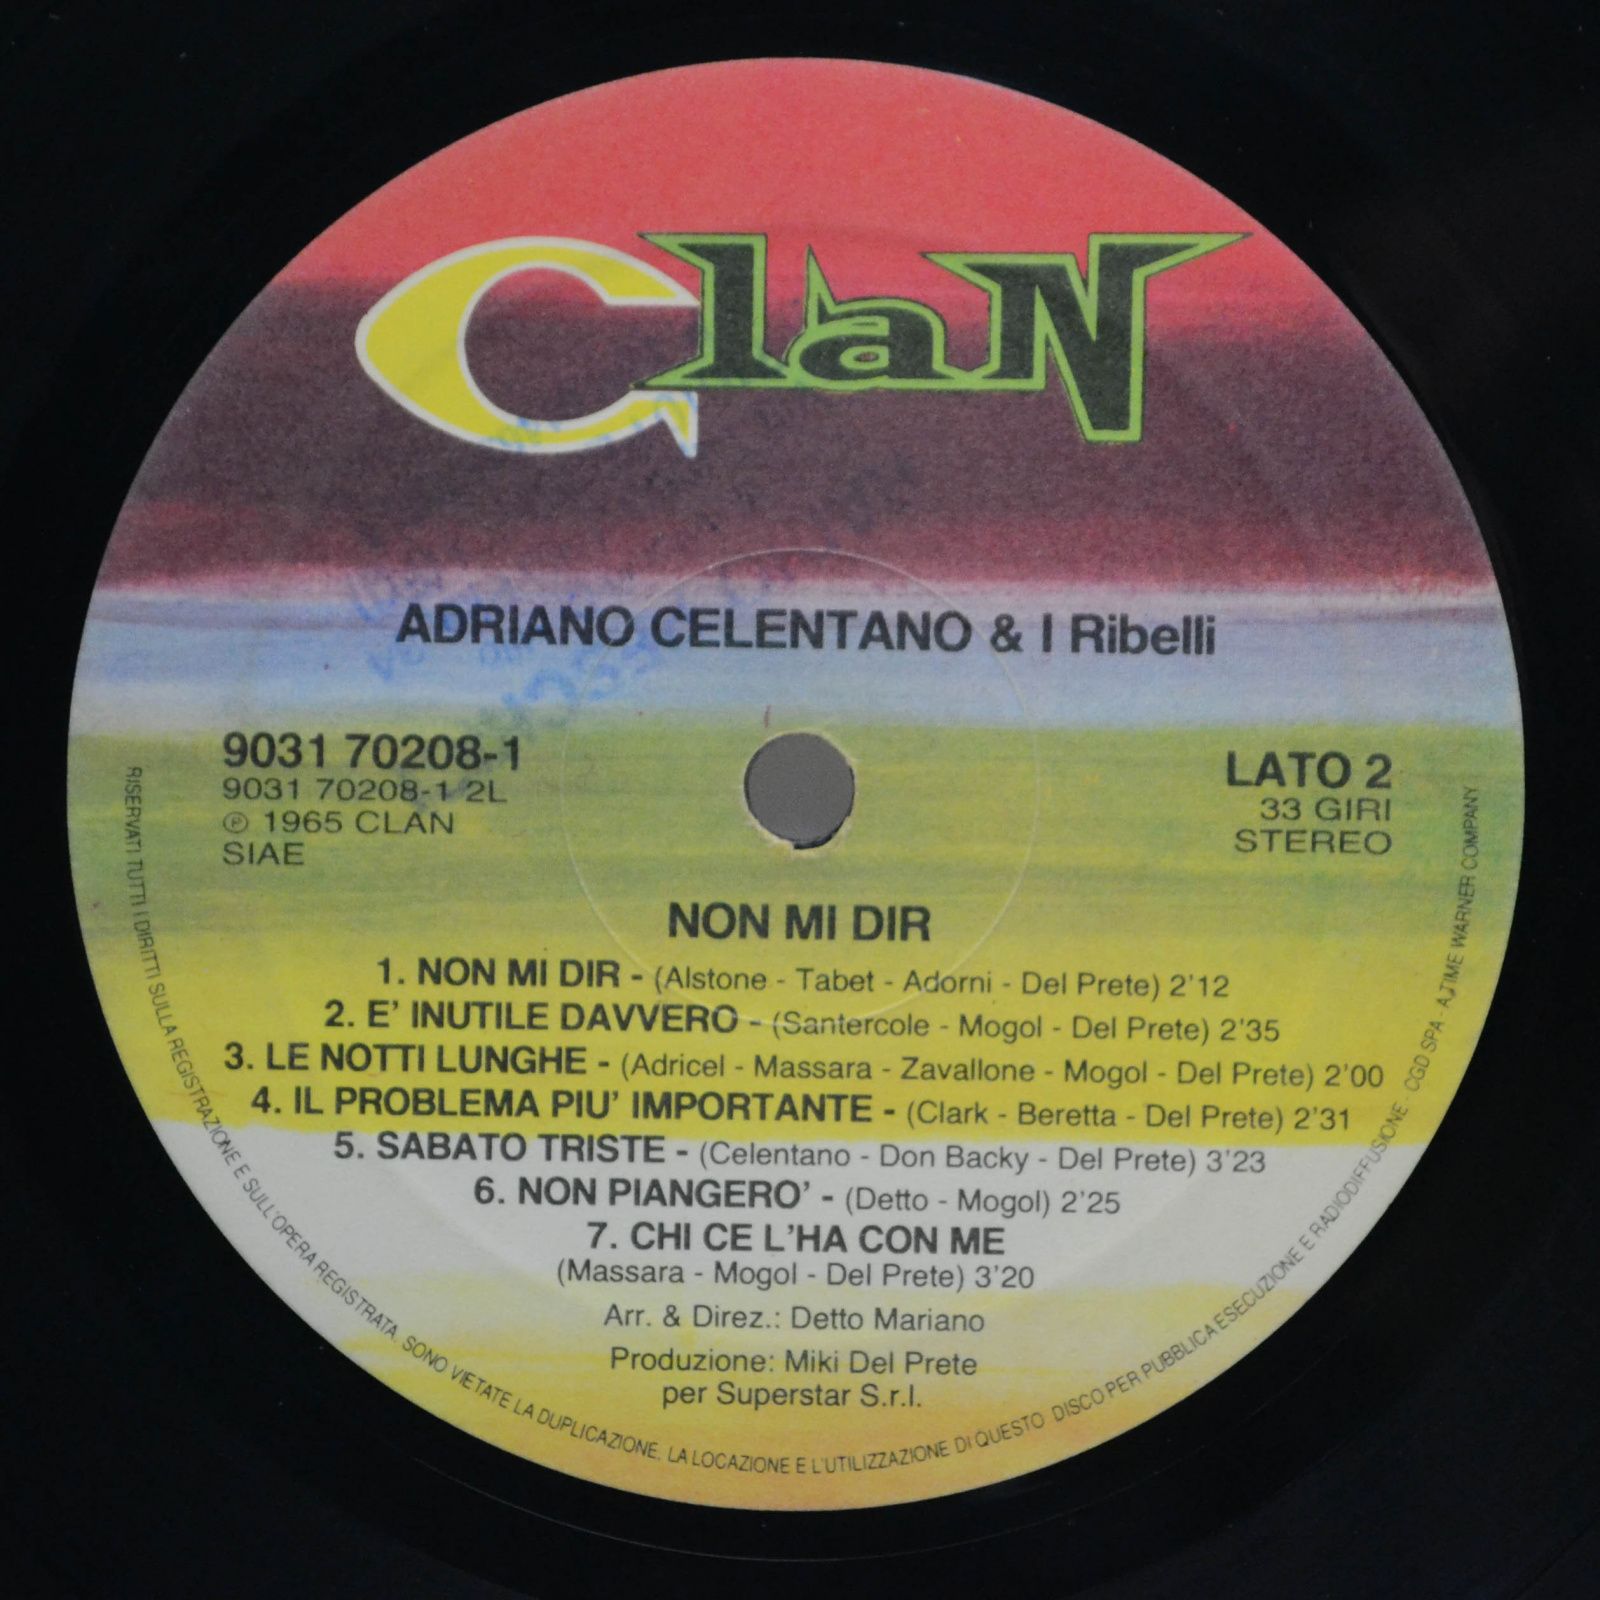 Adriano Celentano — Non Mi Dir (Italy, Clan), 1969